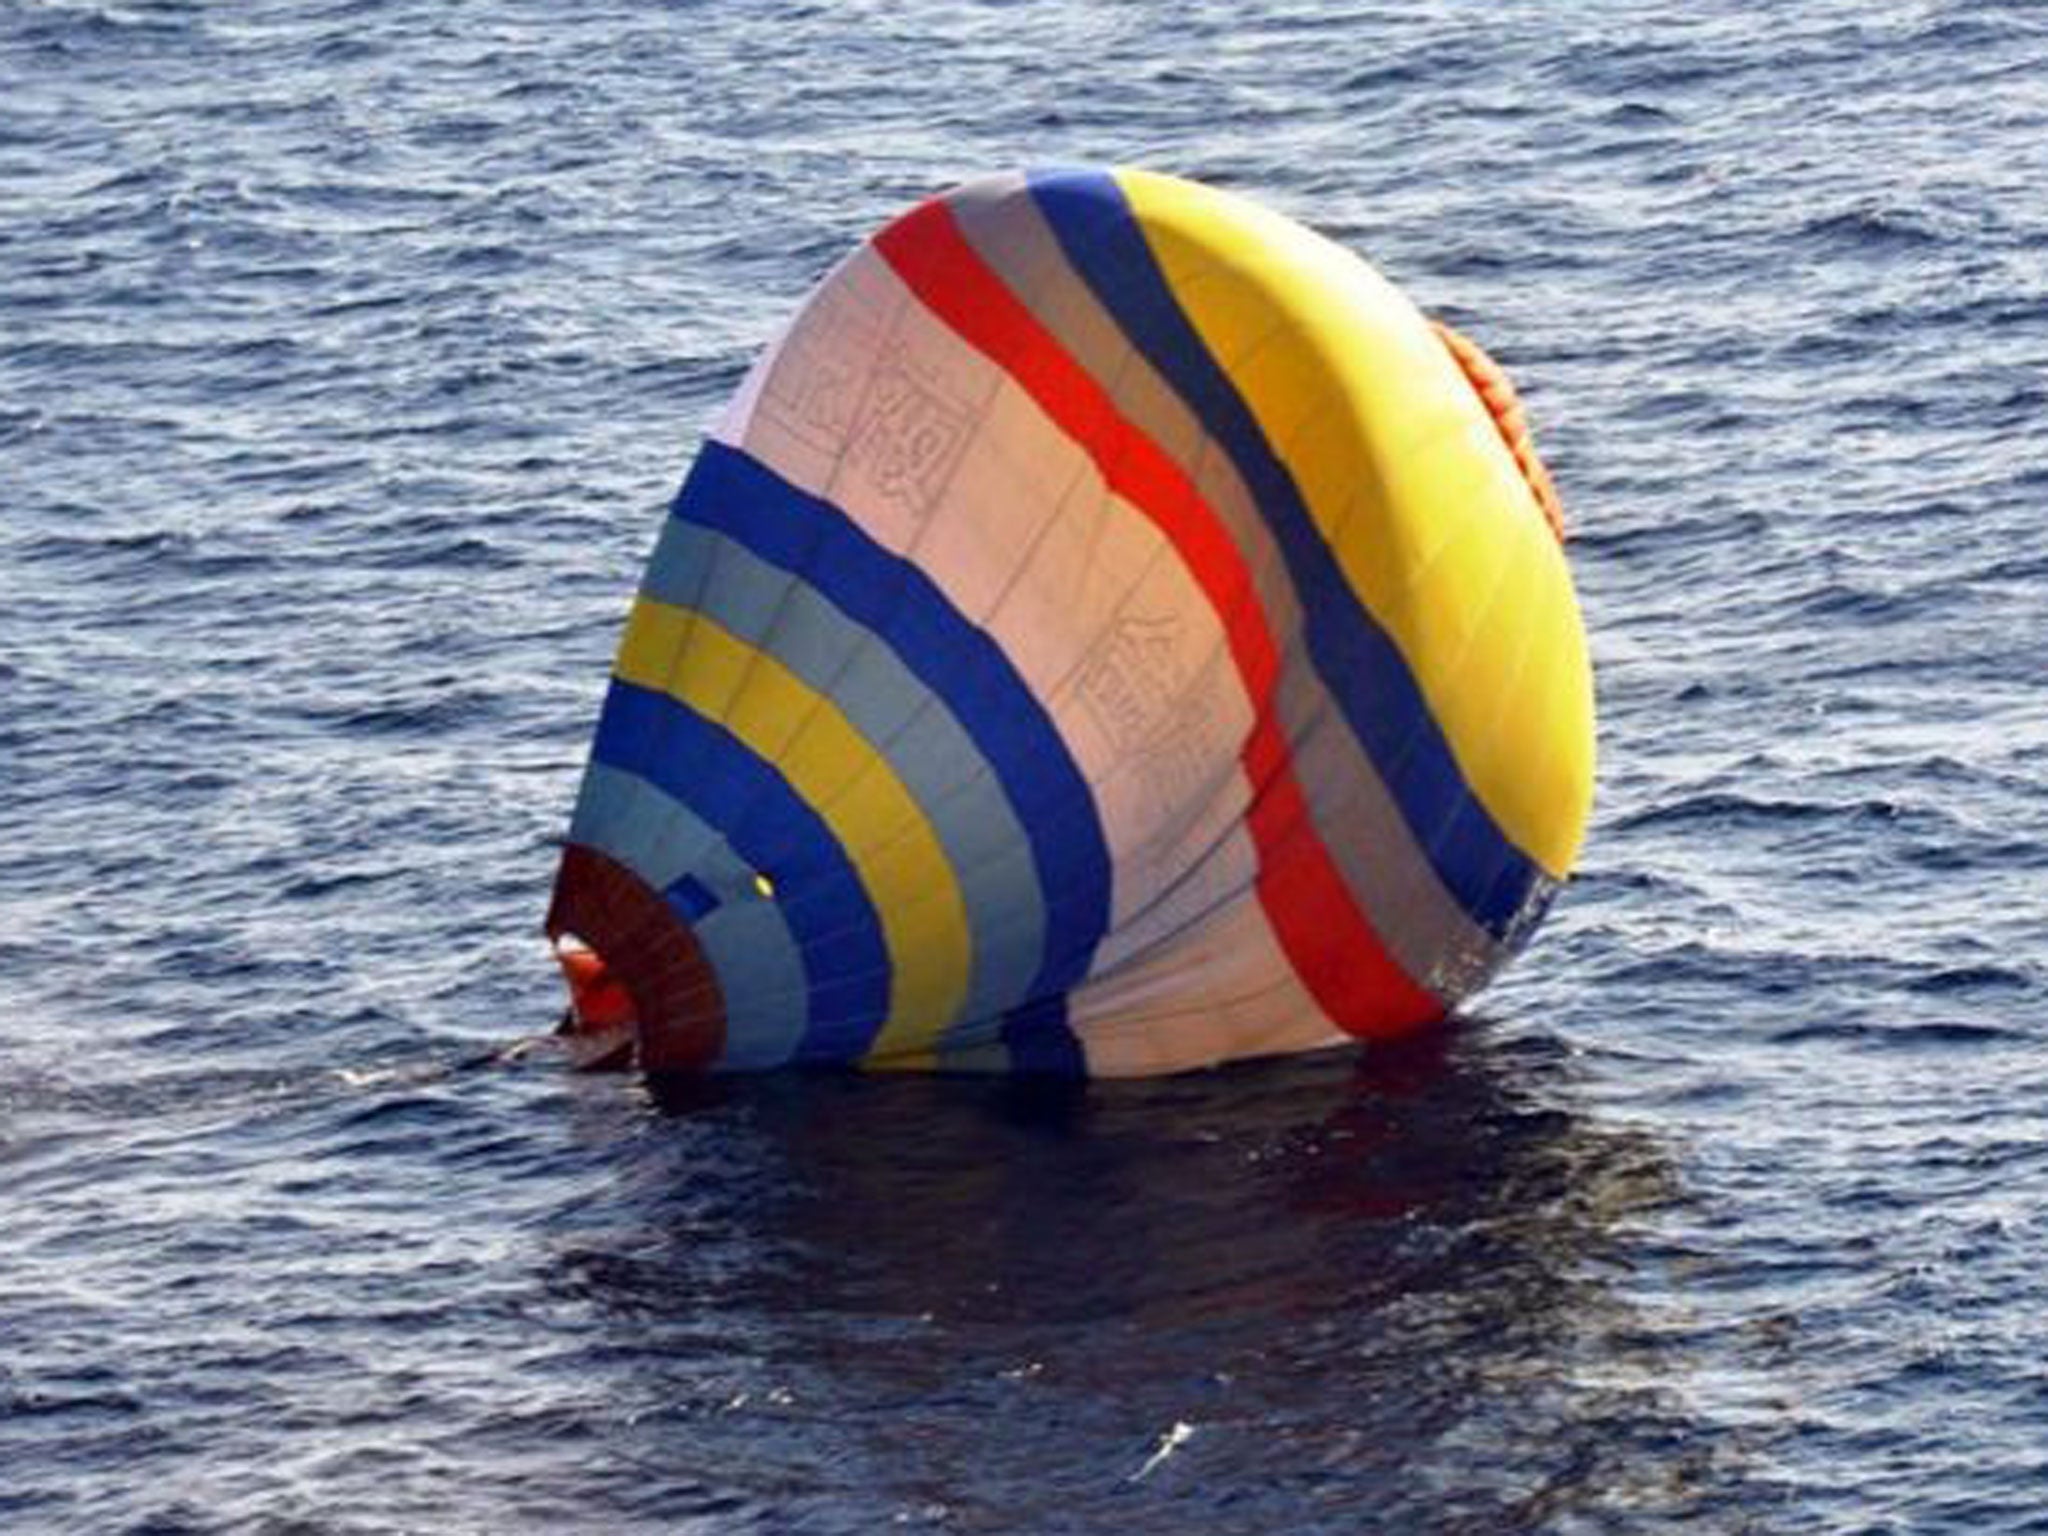 Xu Shuaijun's hot air balloon near the disputed islands